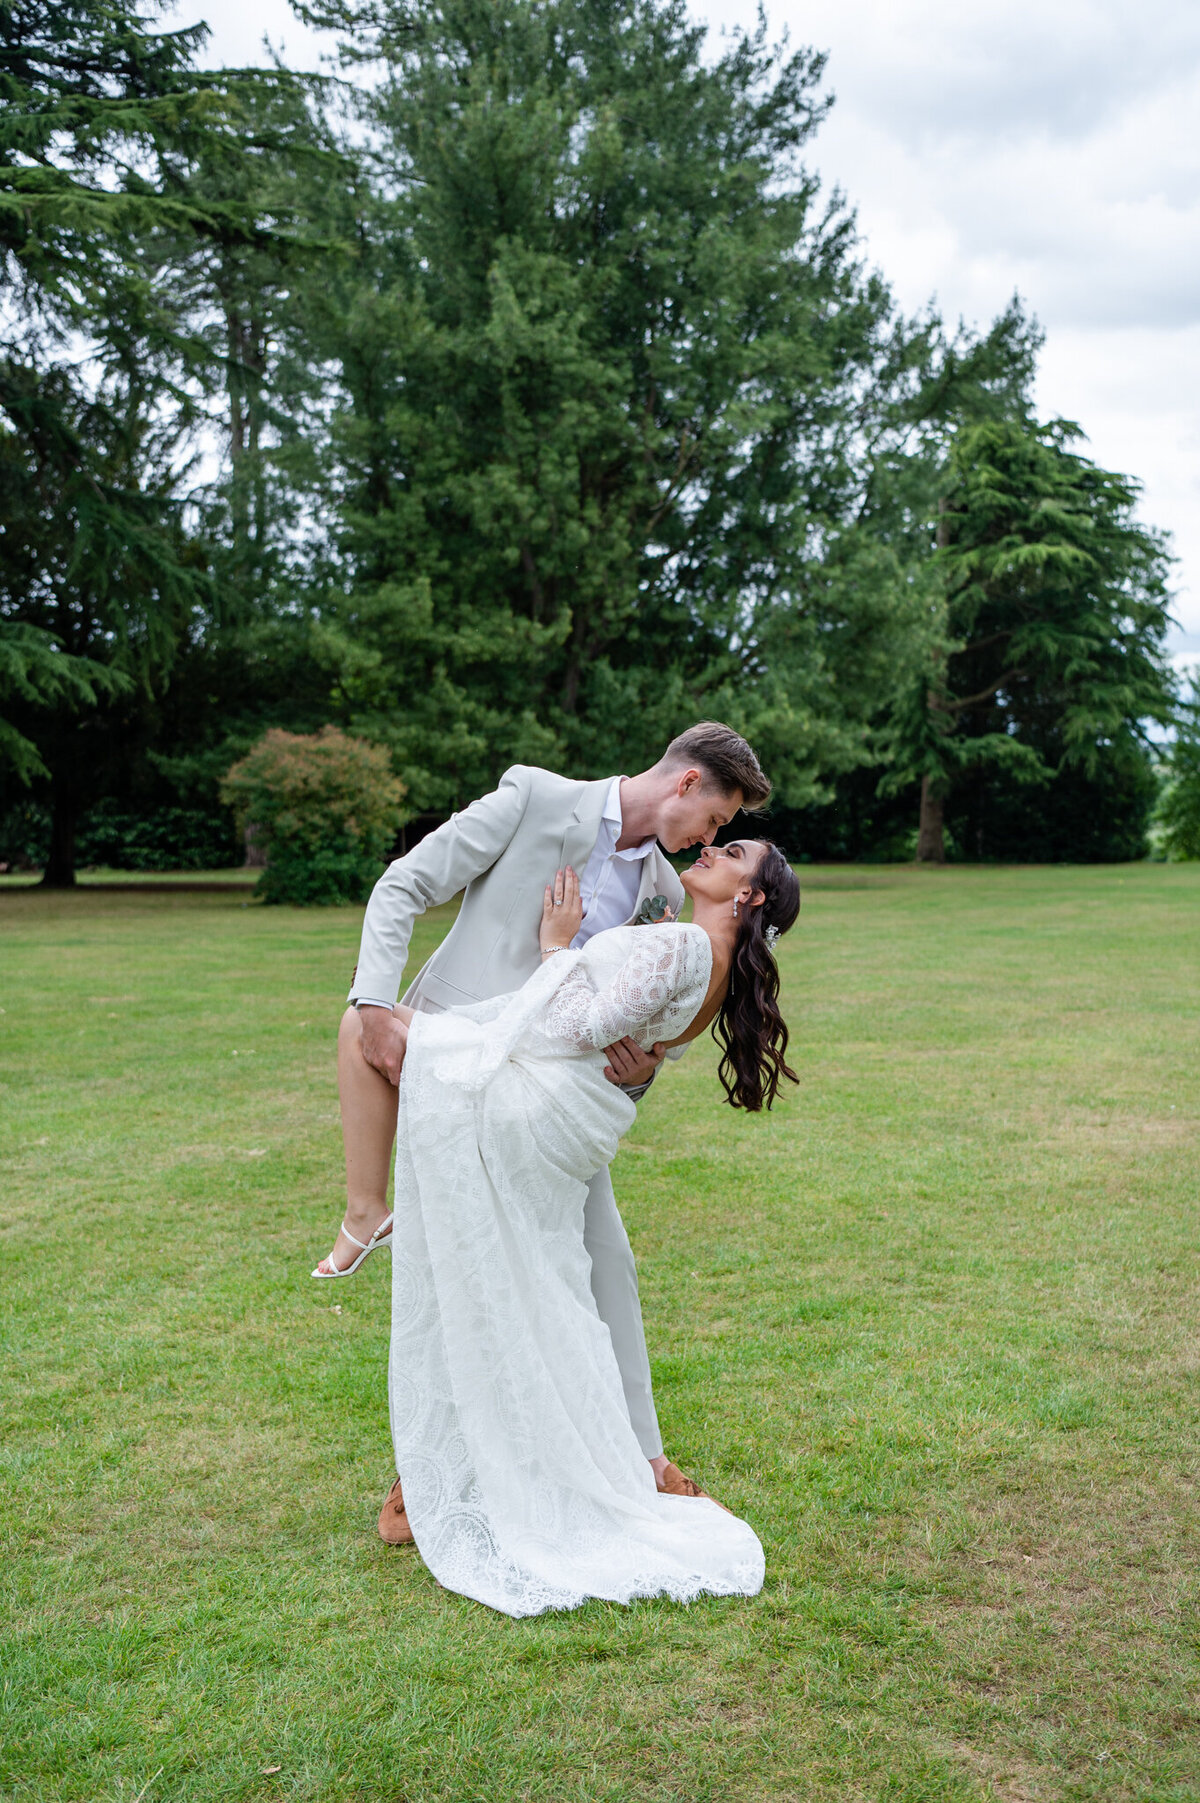 Chloe Bolam - UK Wedding and Engagment Photographer - Swanbourne House Wedding Venue Milton Keynes - Destination Wedding in the UK - 17